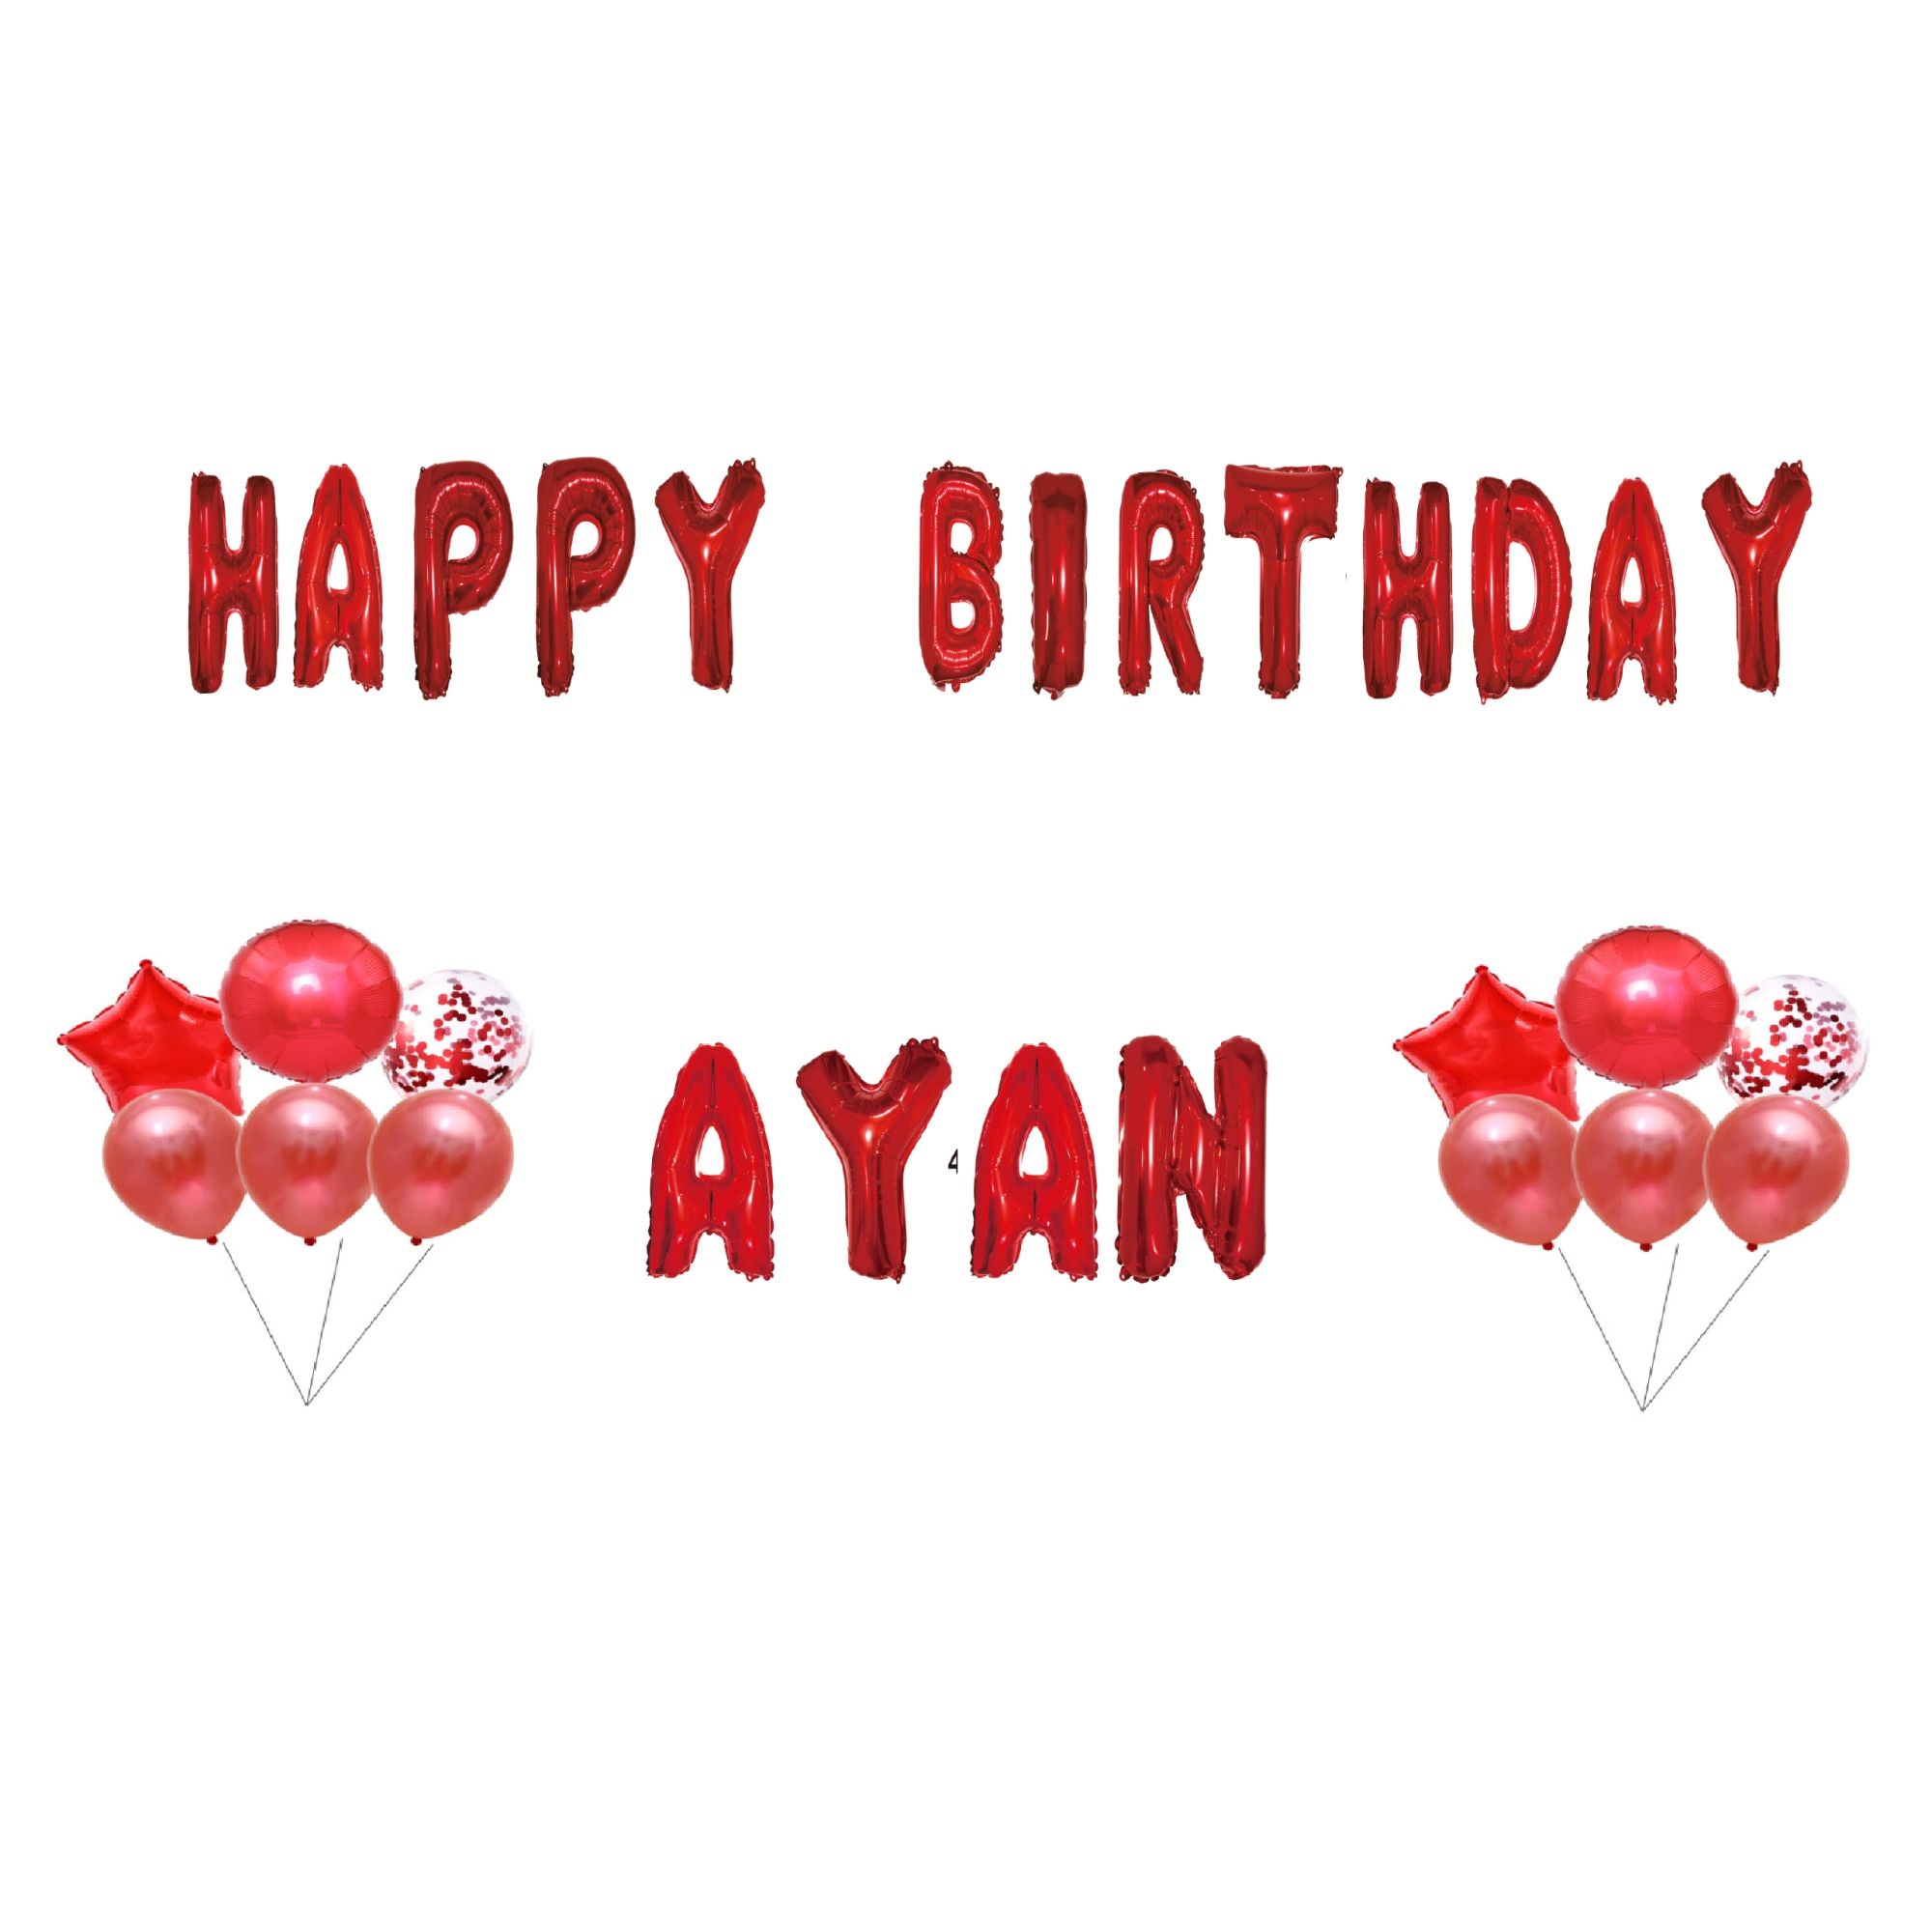 Ayan - Animated Happy Birthday Cake GIF for WhatsApp | Funimada.com